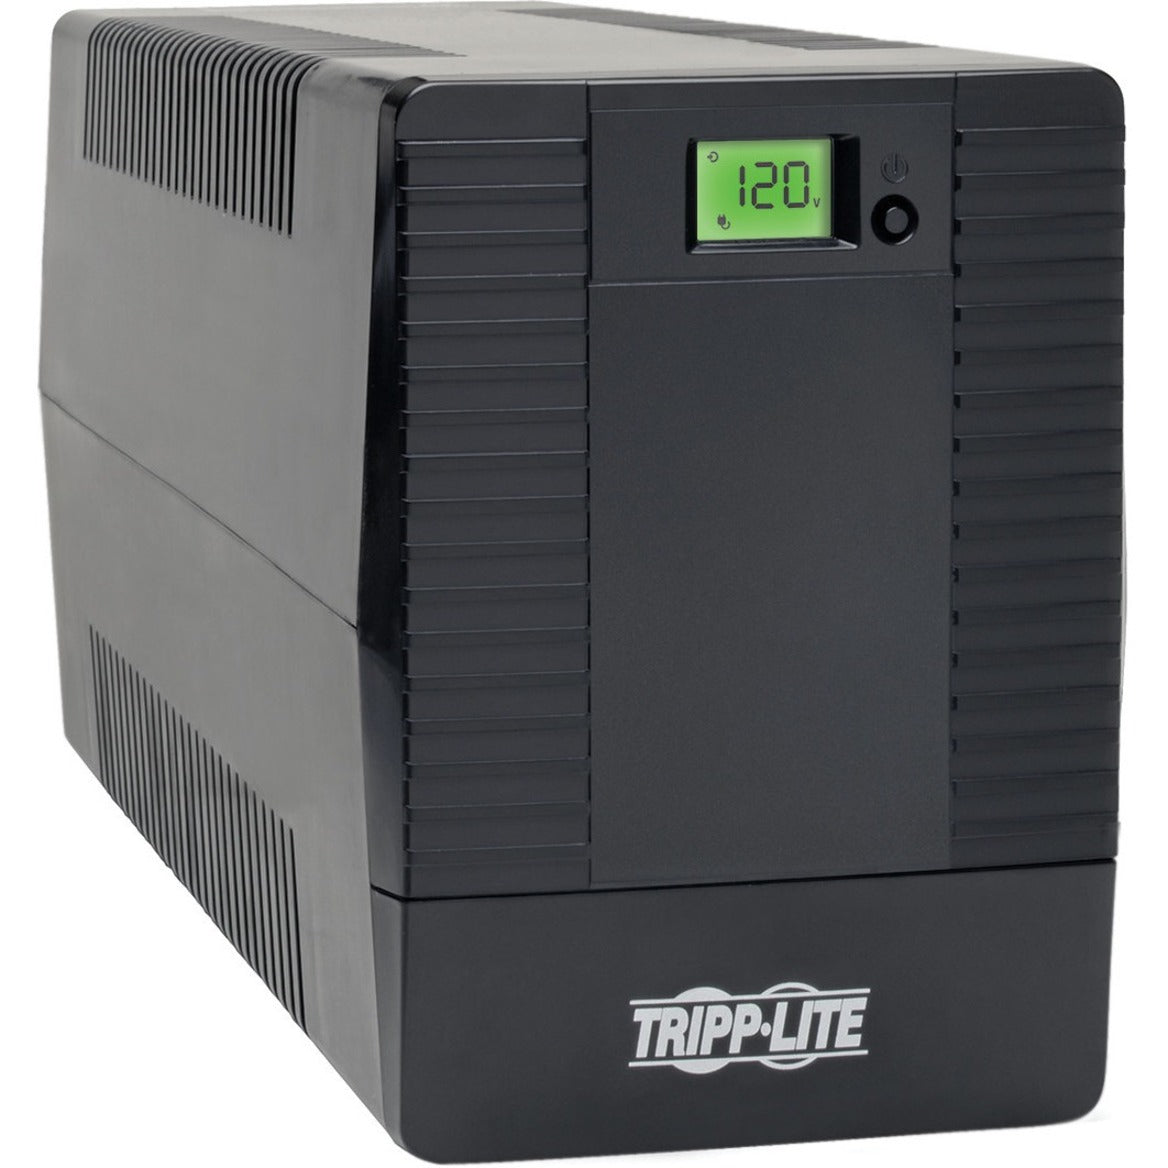 Tripp Lite SMART1500TSU 1440VA Tower UPS, AVR LCD, 3 Year Warranty, Overload Alarm